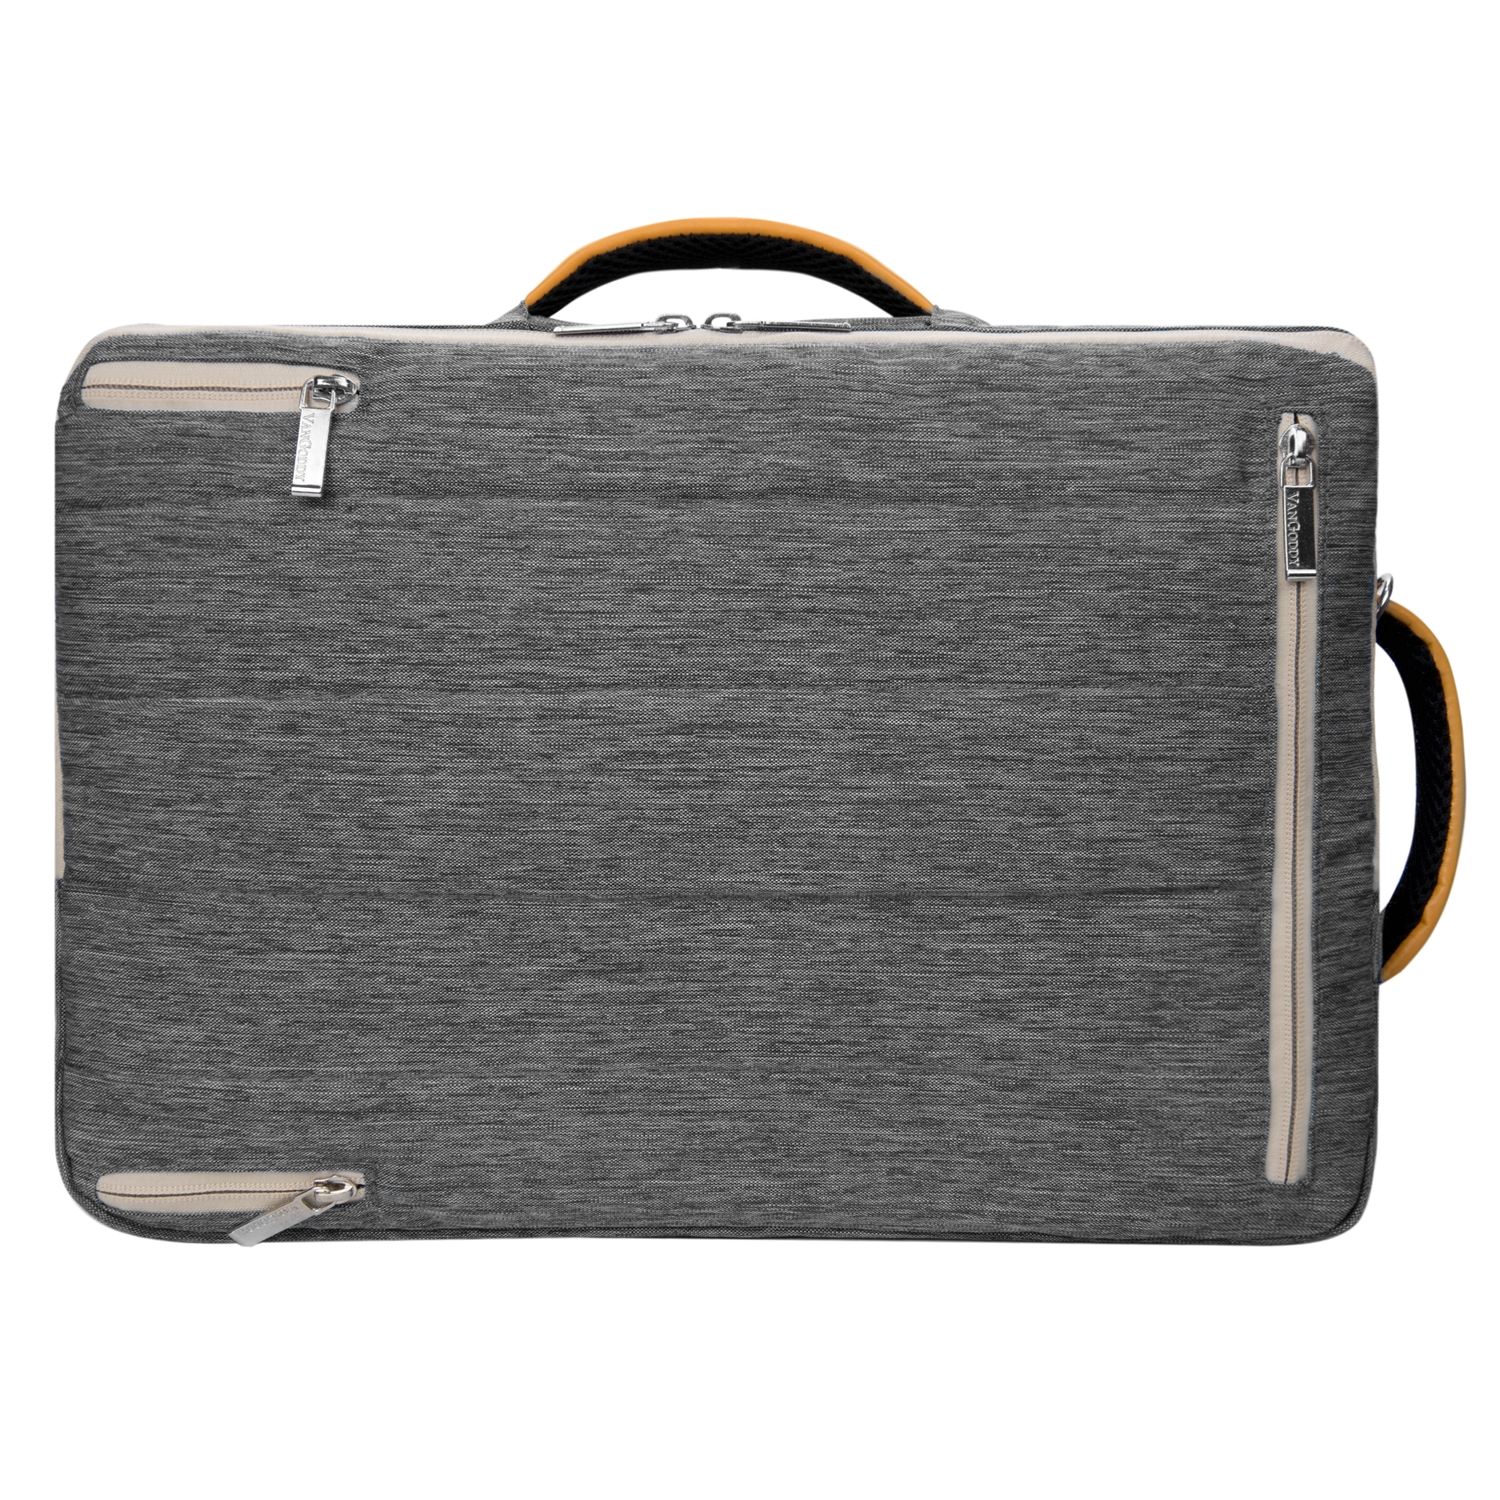 Slate Laptop Bag 15.6